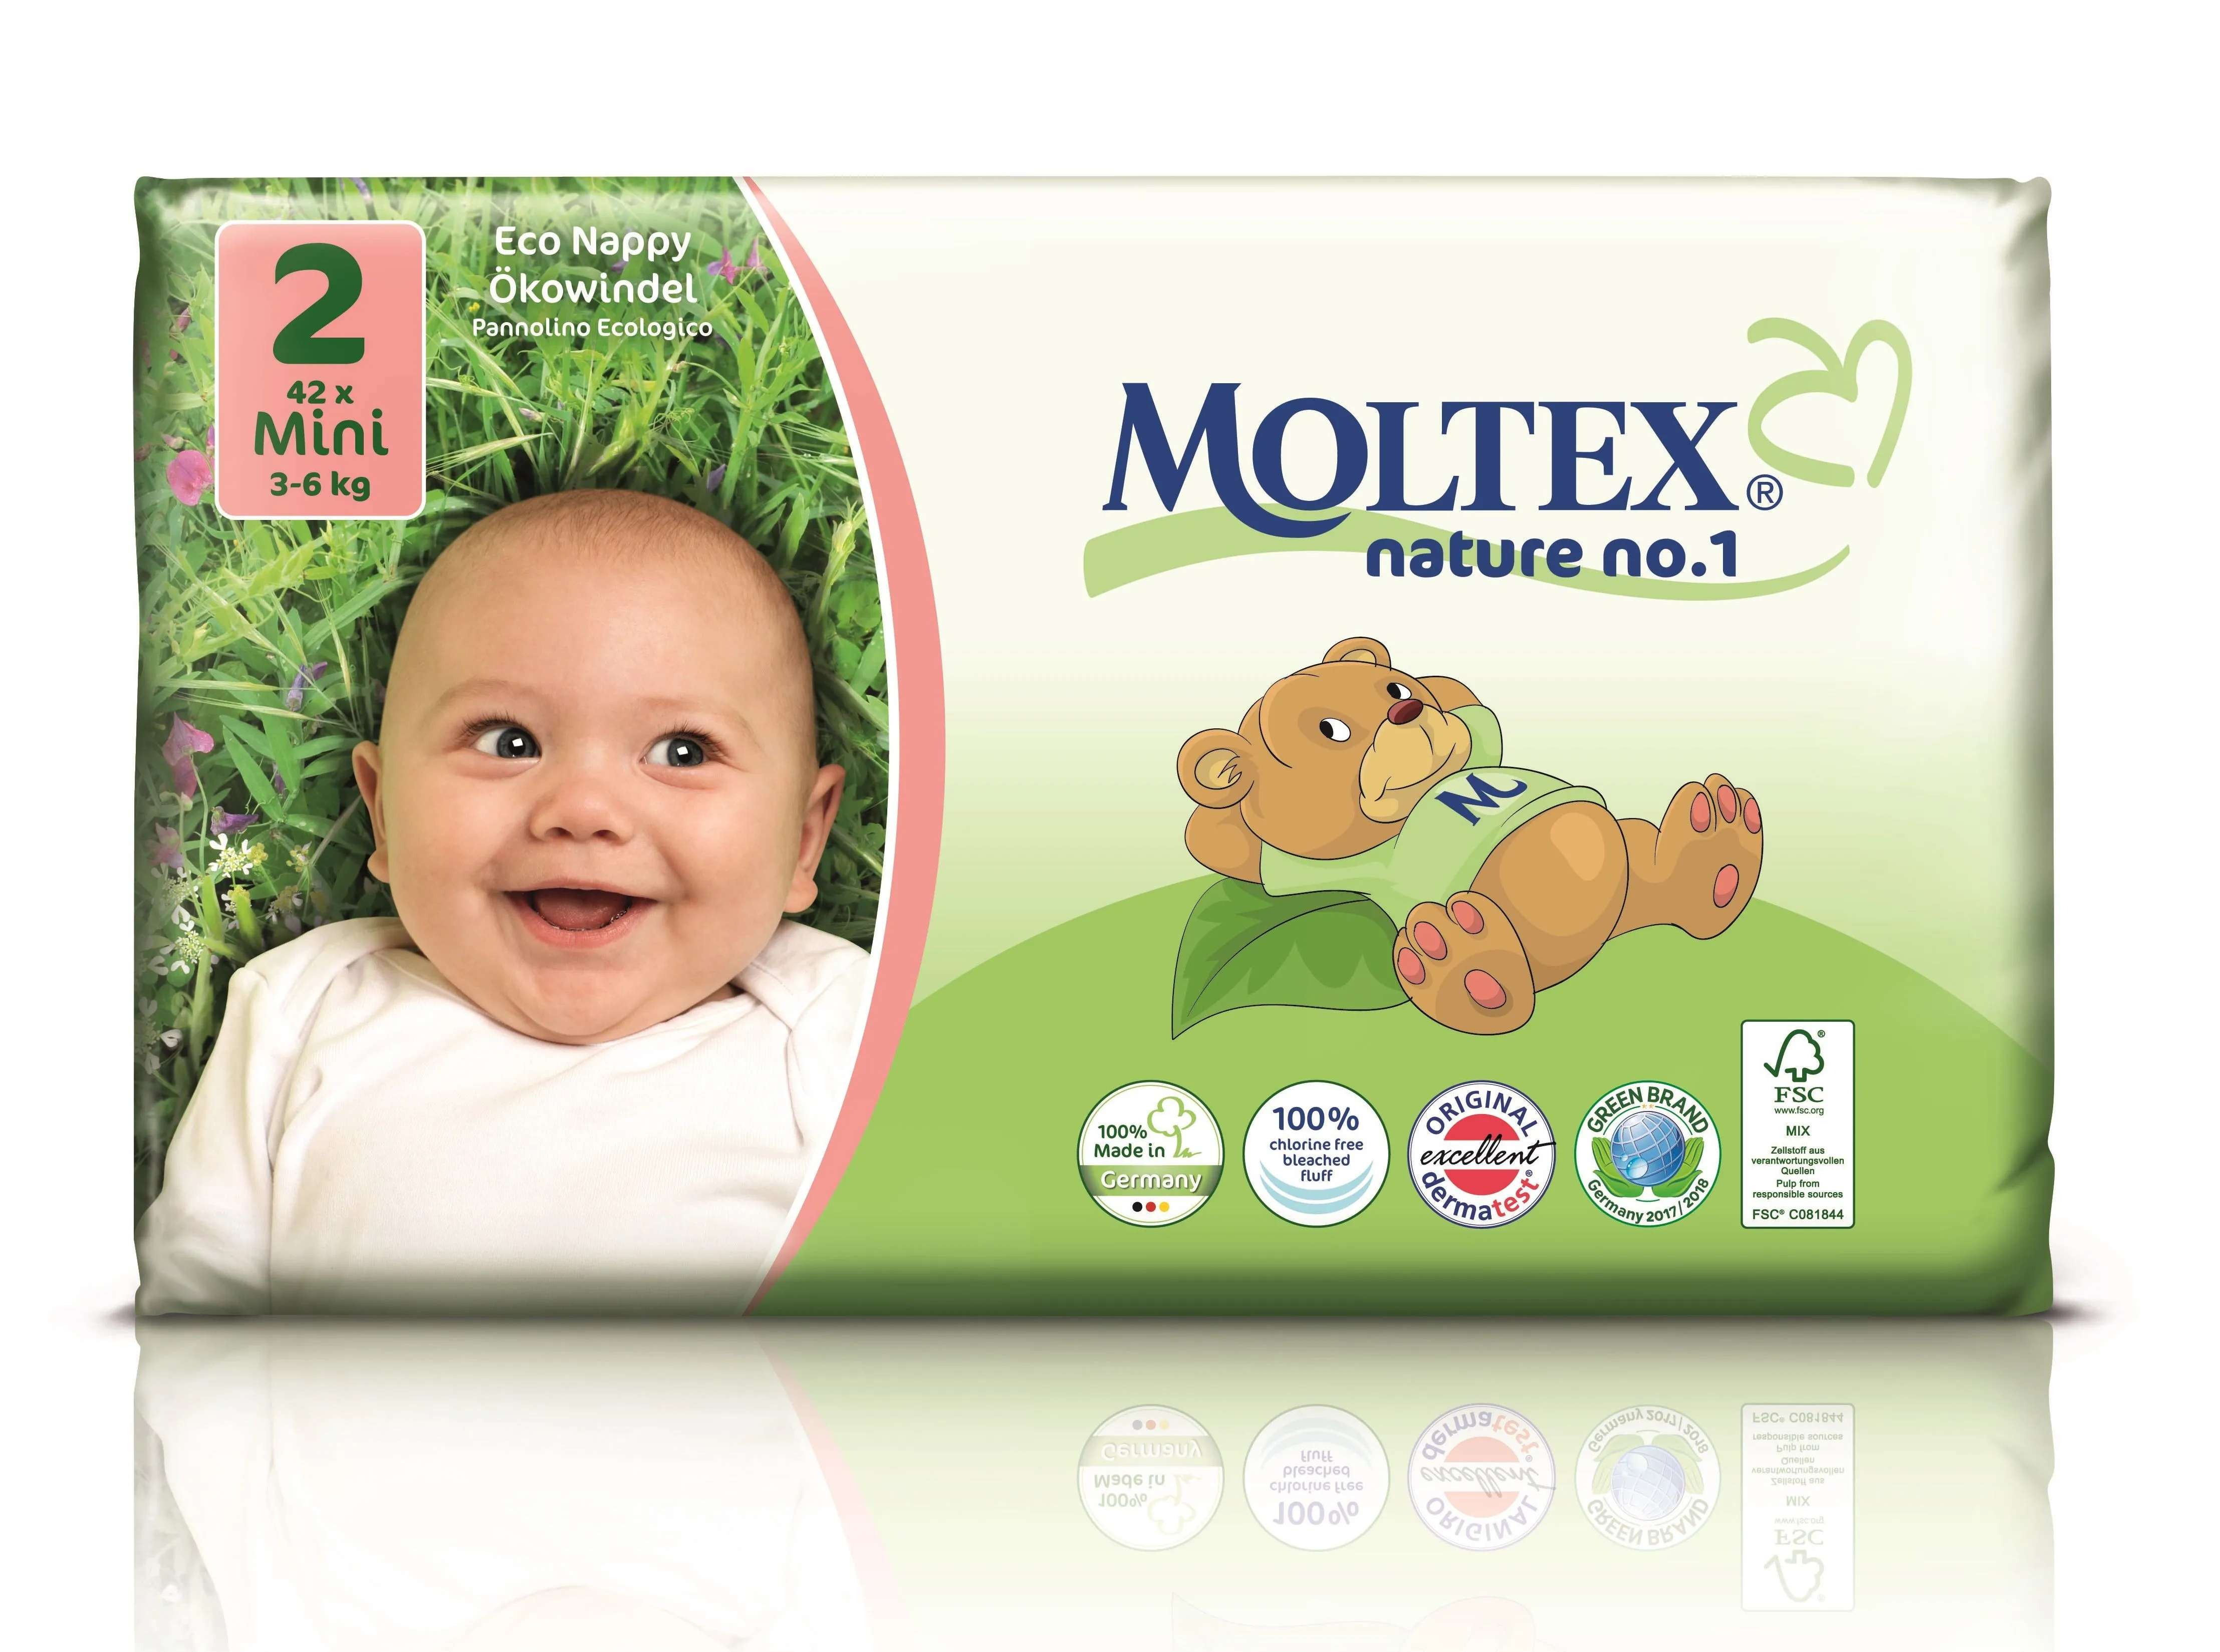 Moltex nature no.1 Mini 3-6 kg dětské plenky 42 ks